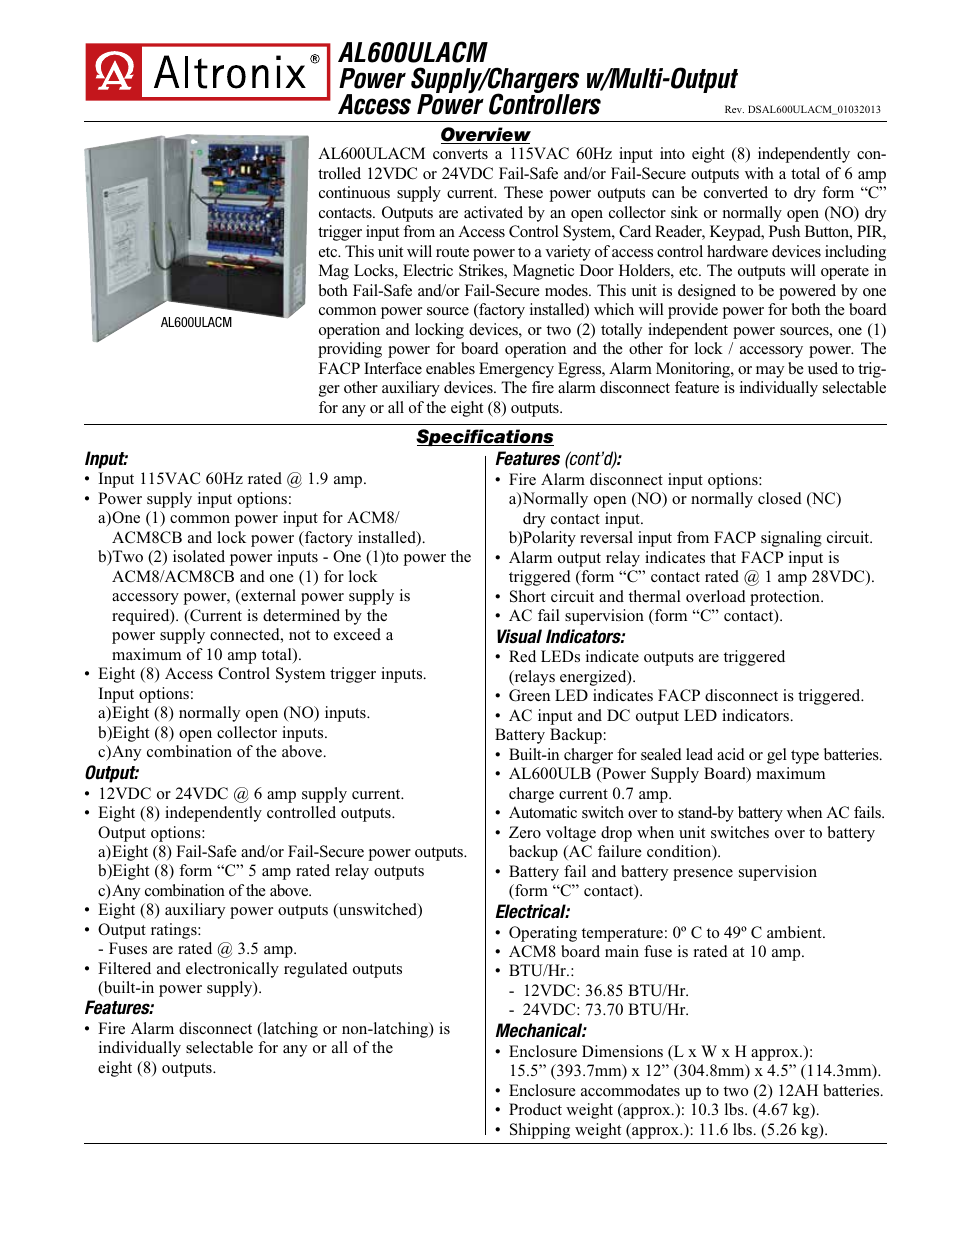 Altronix AL600ULACM FUSE OUT ACCESS PWR SPL W FACP DISC12VDC OR 24VDC 6A